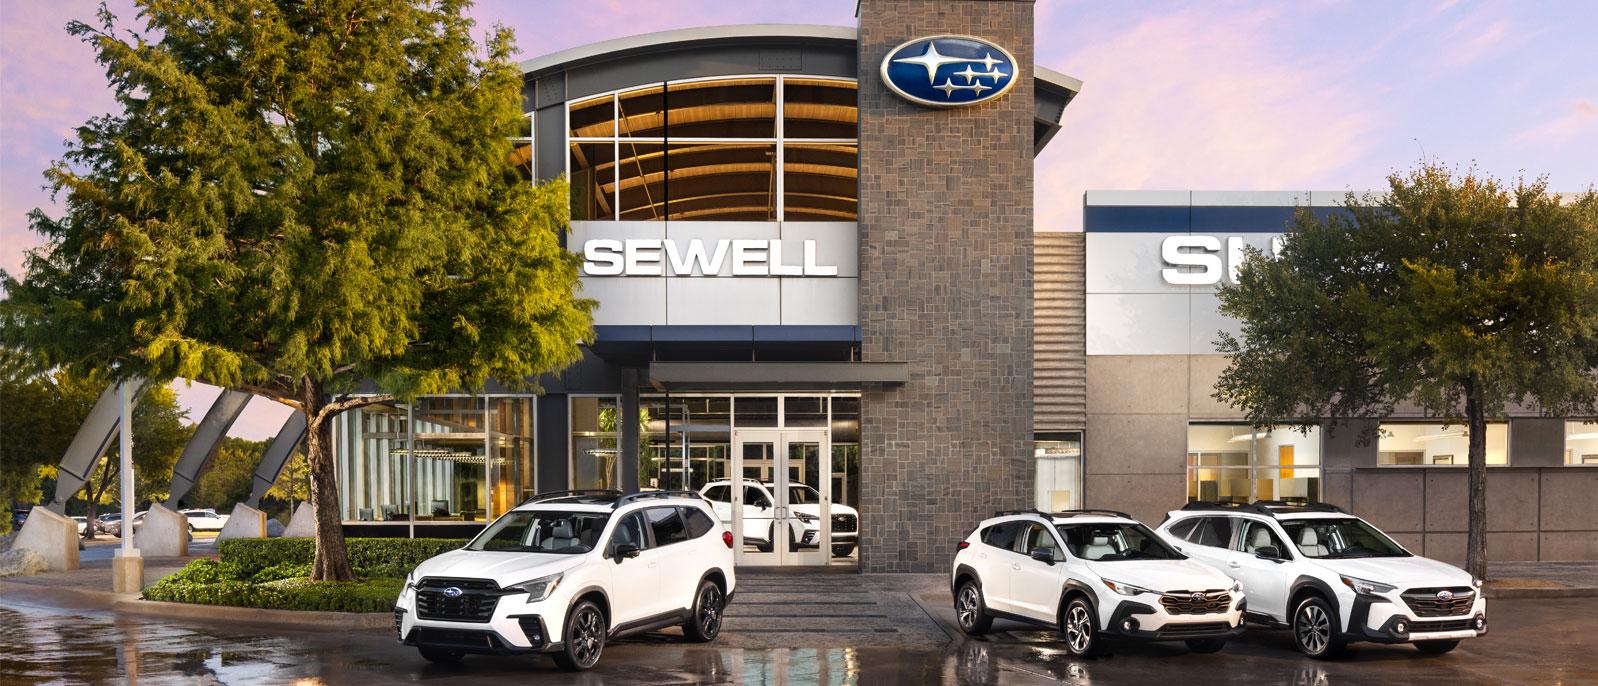 Sewell Subaru Dealership Exterior Photo